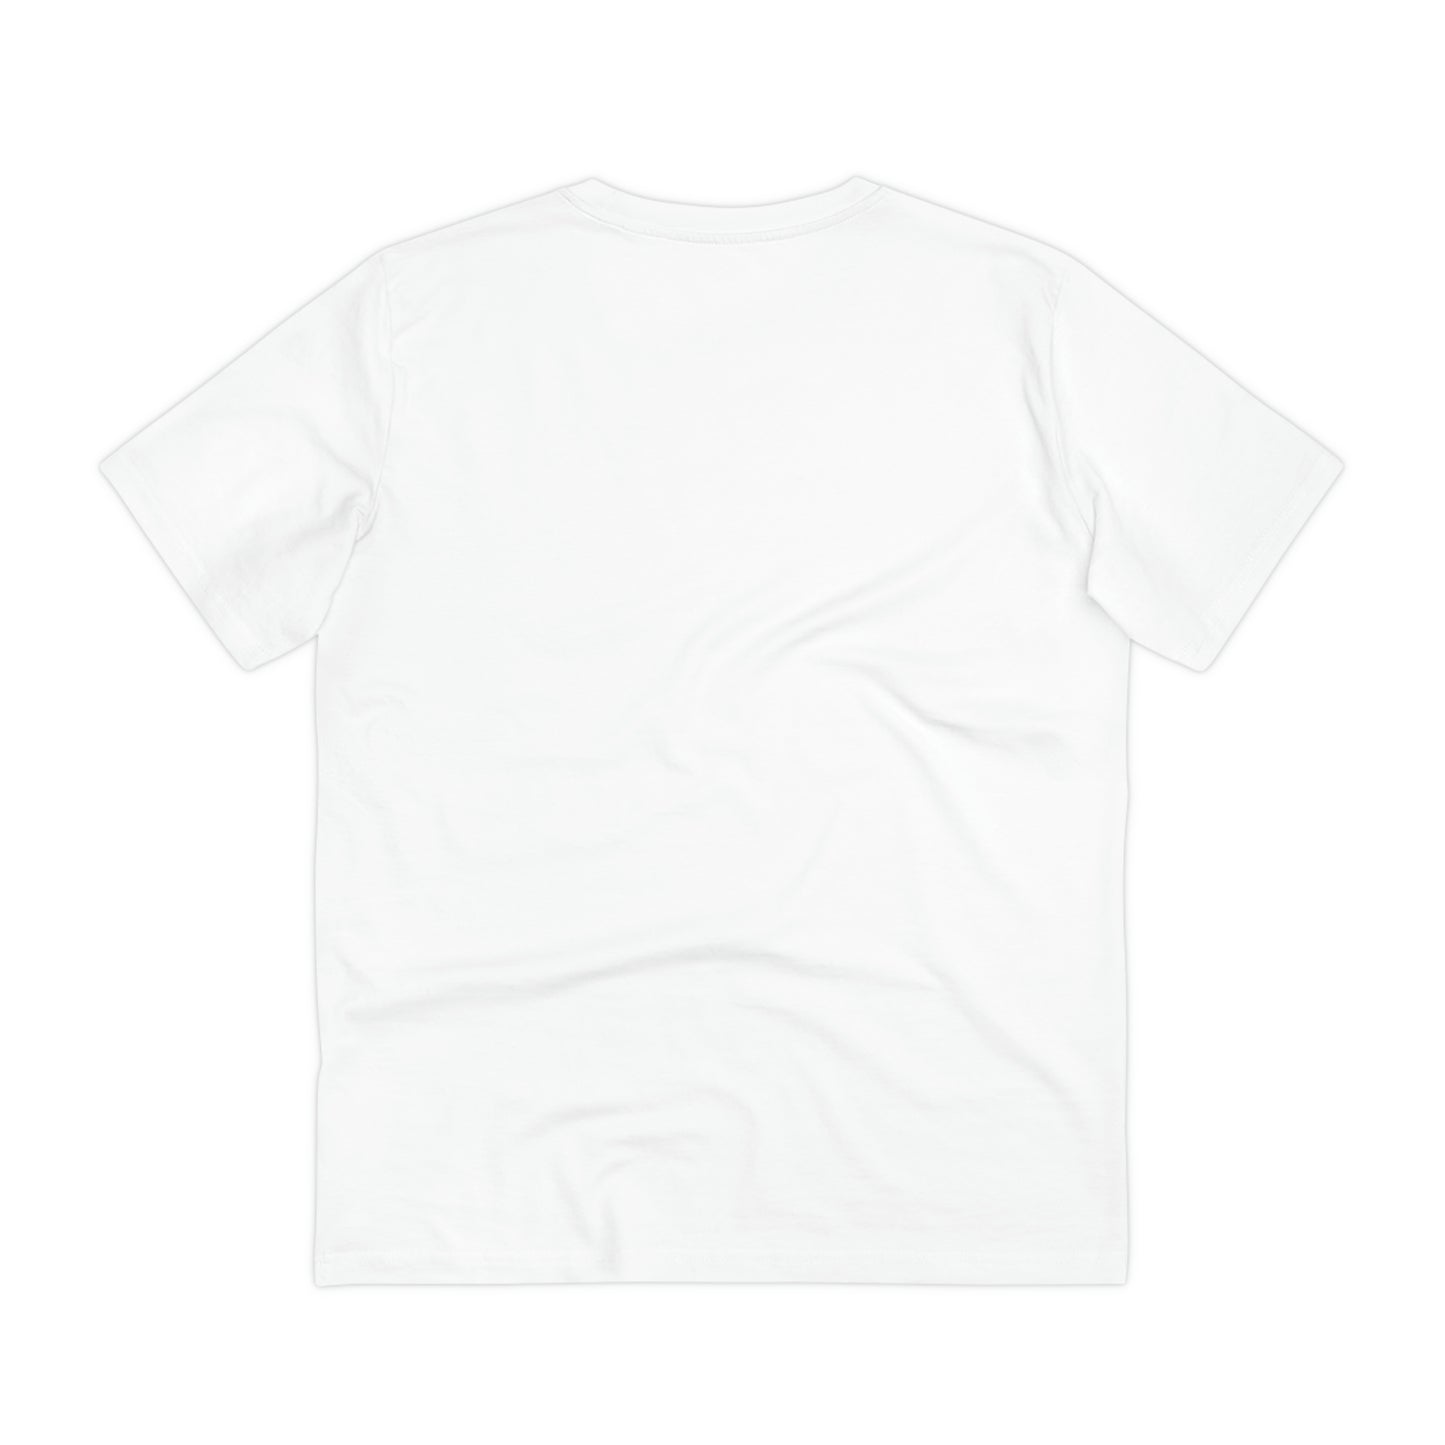 Freename - White Web3 T-shirt  - Unisex